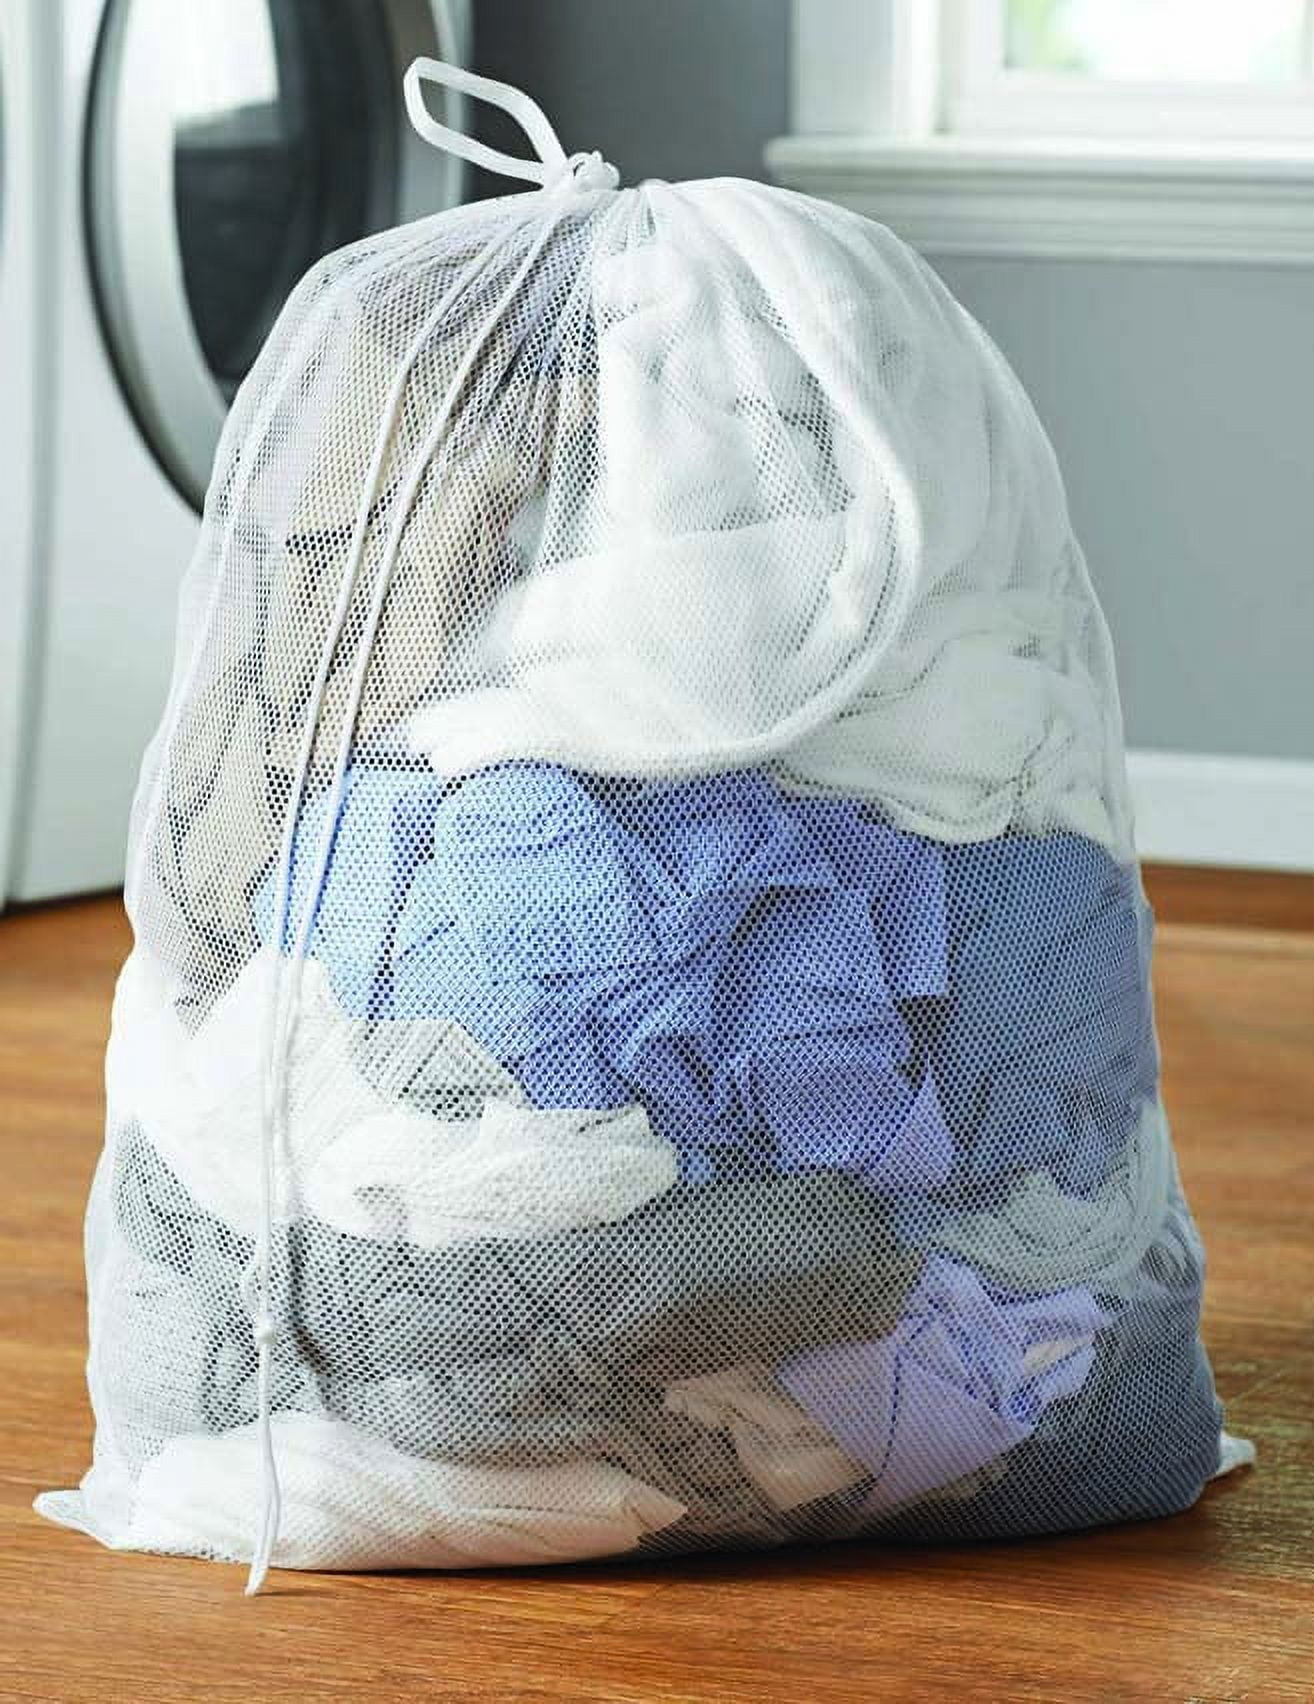 Mesh Laundry Bag, Drawstring Washing Machine Laundry Bag Underwear